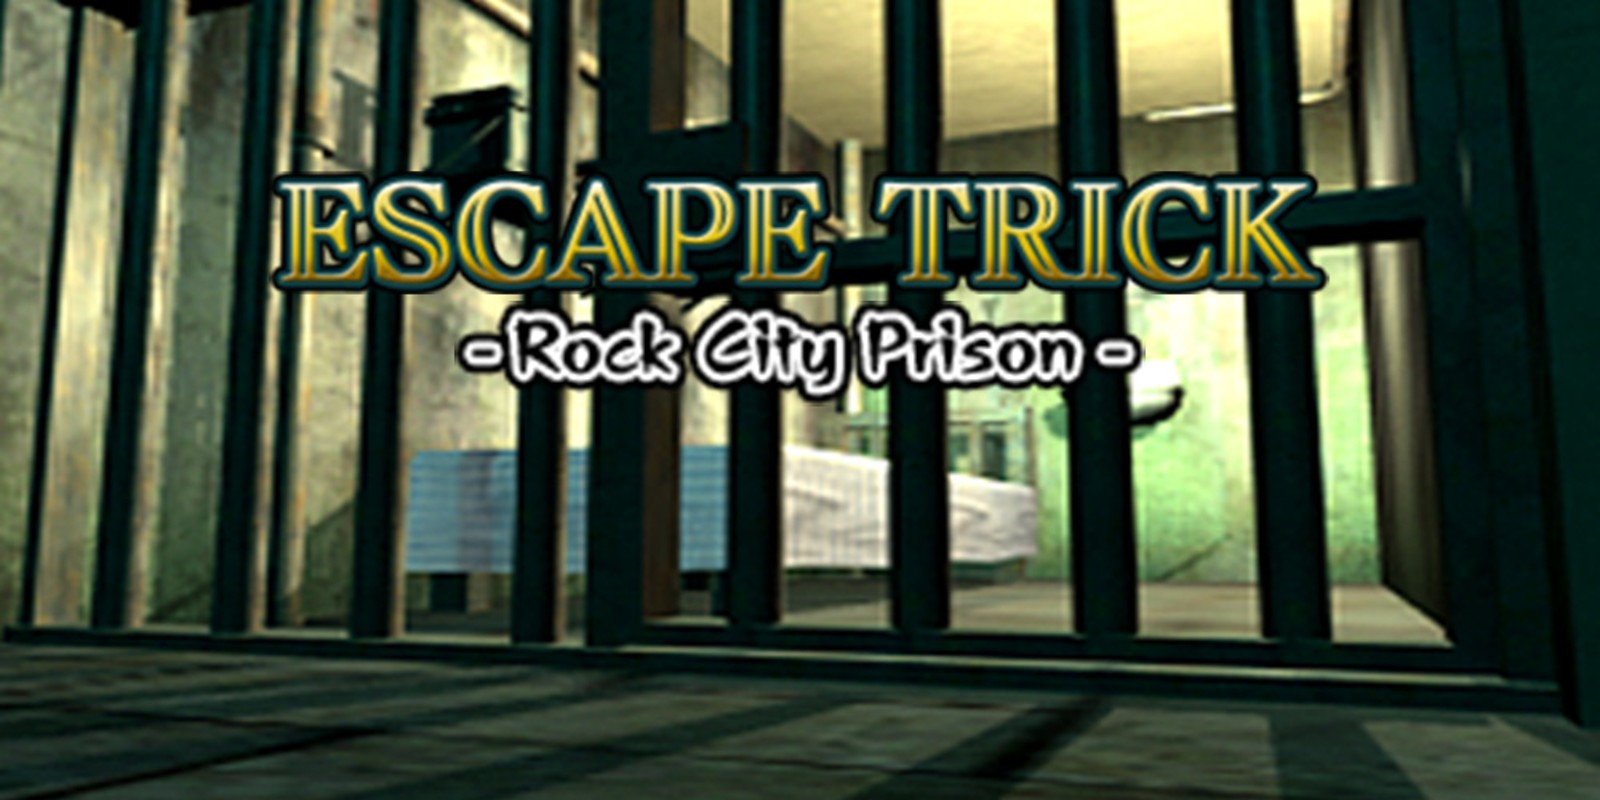 GO Series: Escape Trick - Rock City Prison